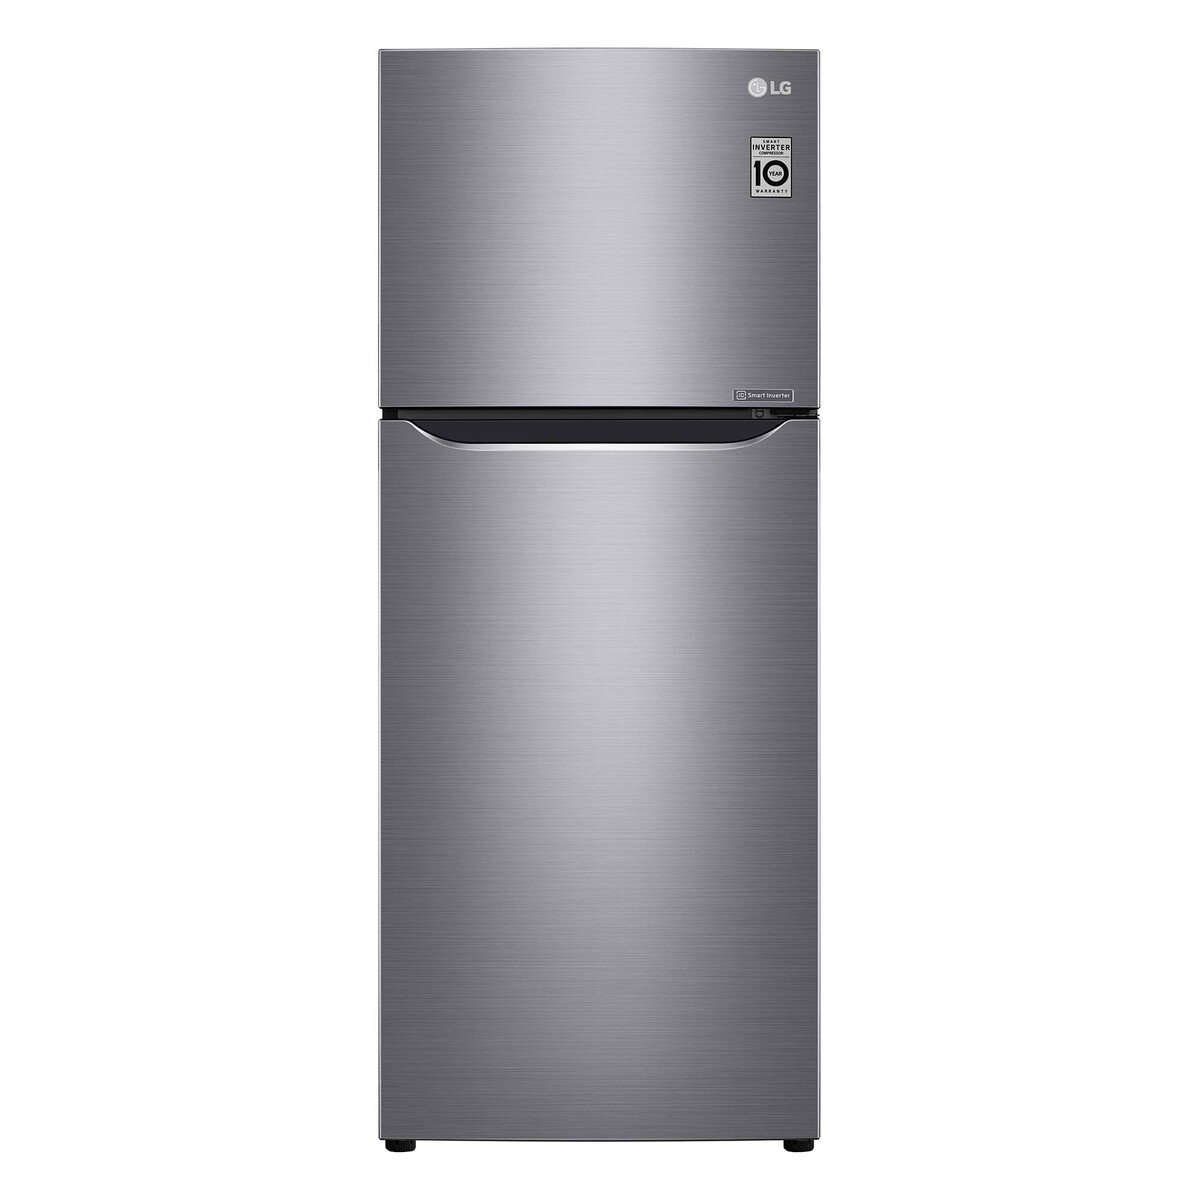 LG Double Door Refrigerator 234LTR, Smart Inverter Compressor, Multi Air Flow, Smart Diagnosis™, Platinum Silver, GR-C345SLBB